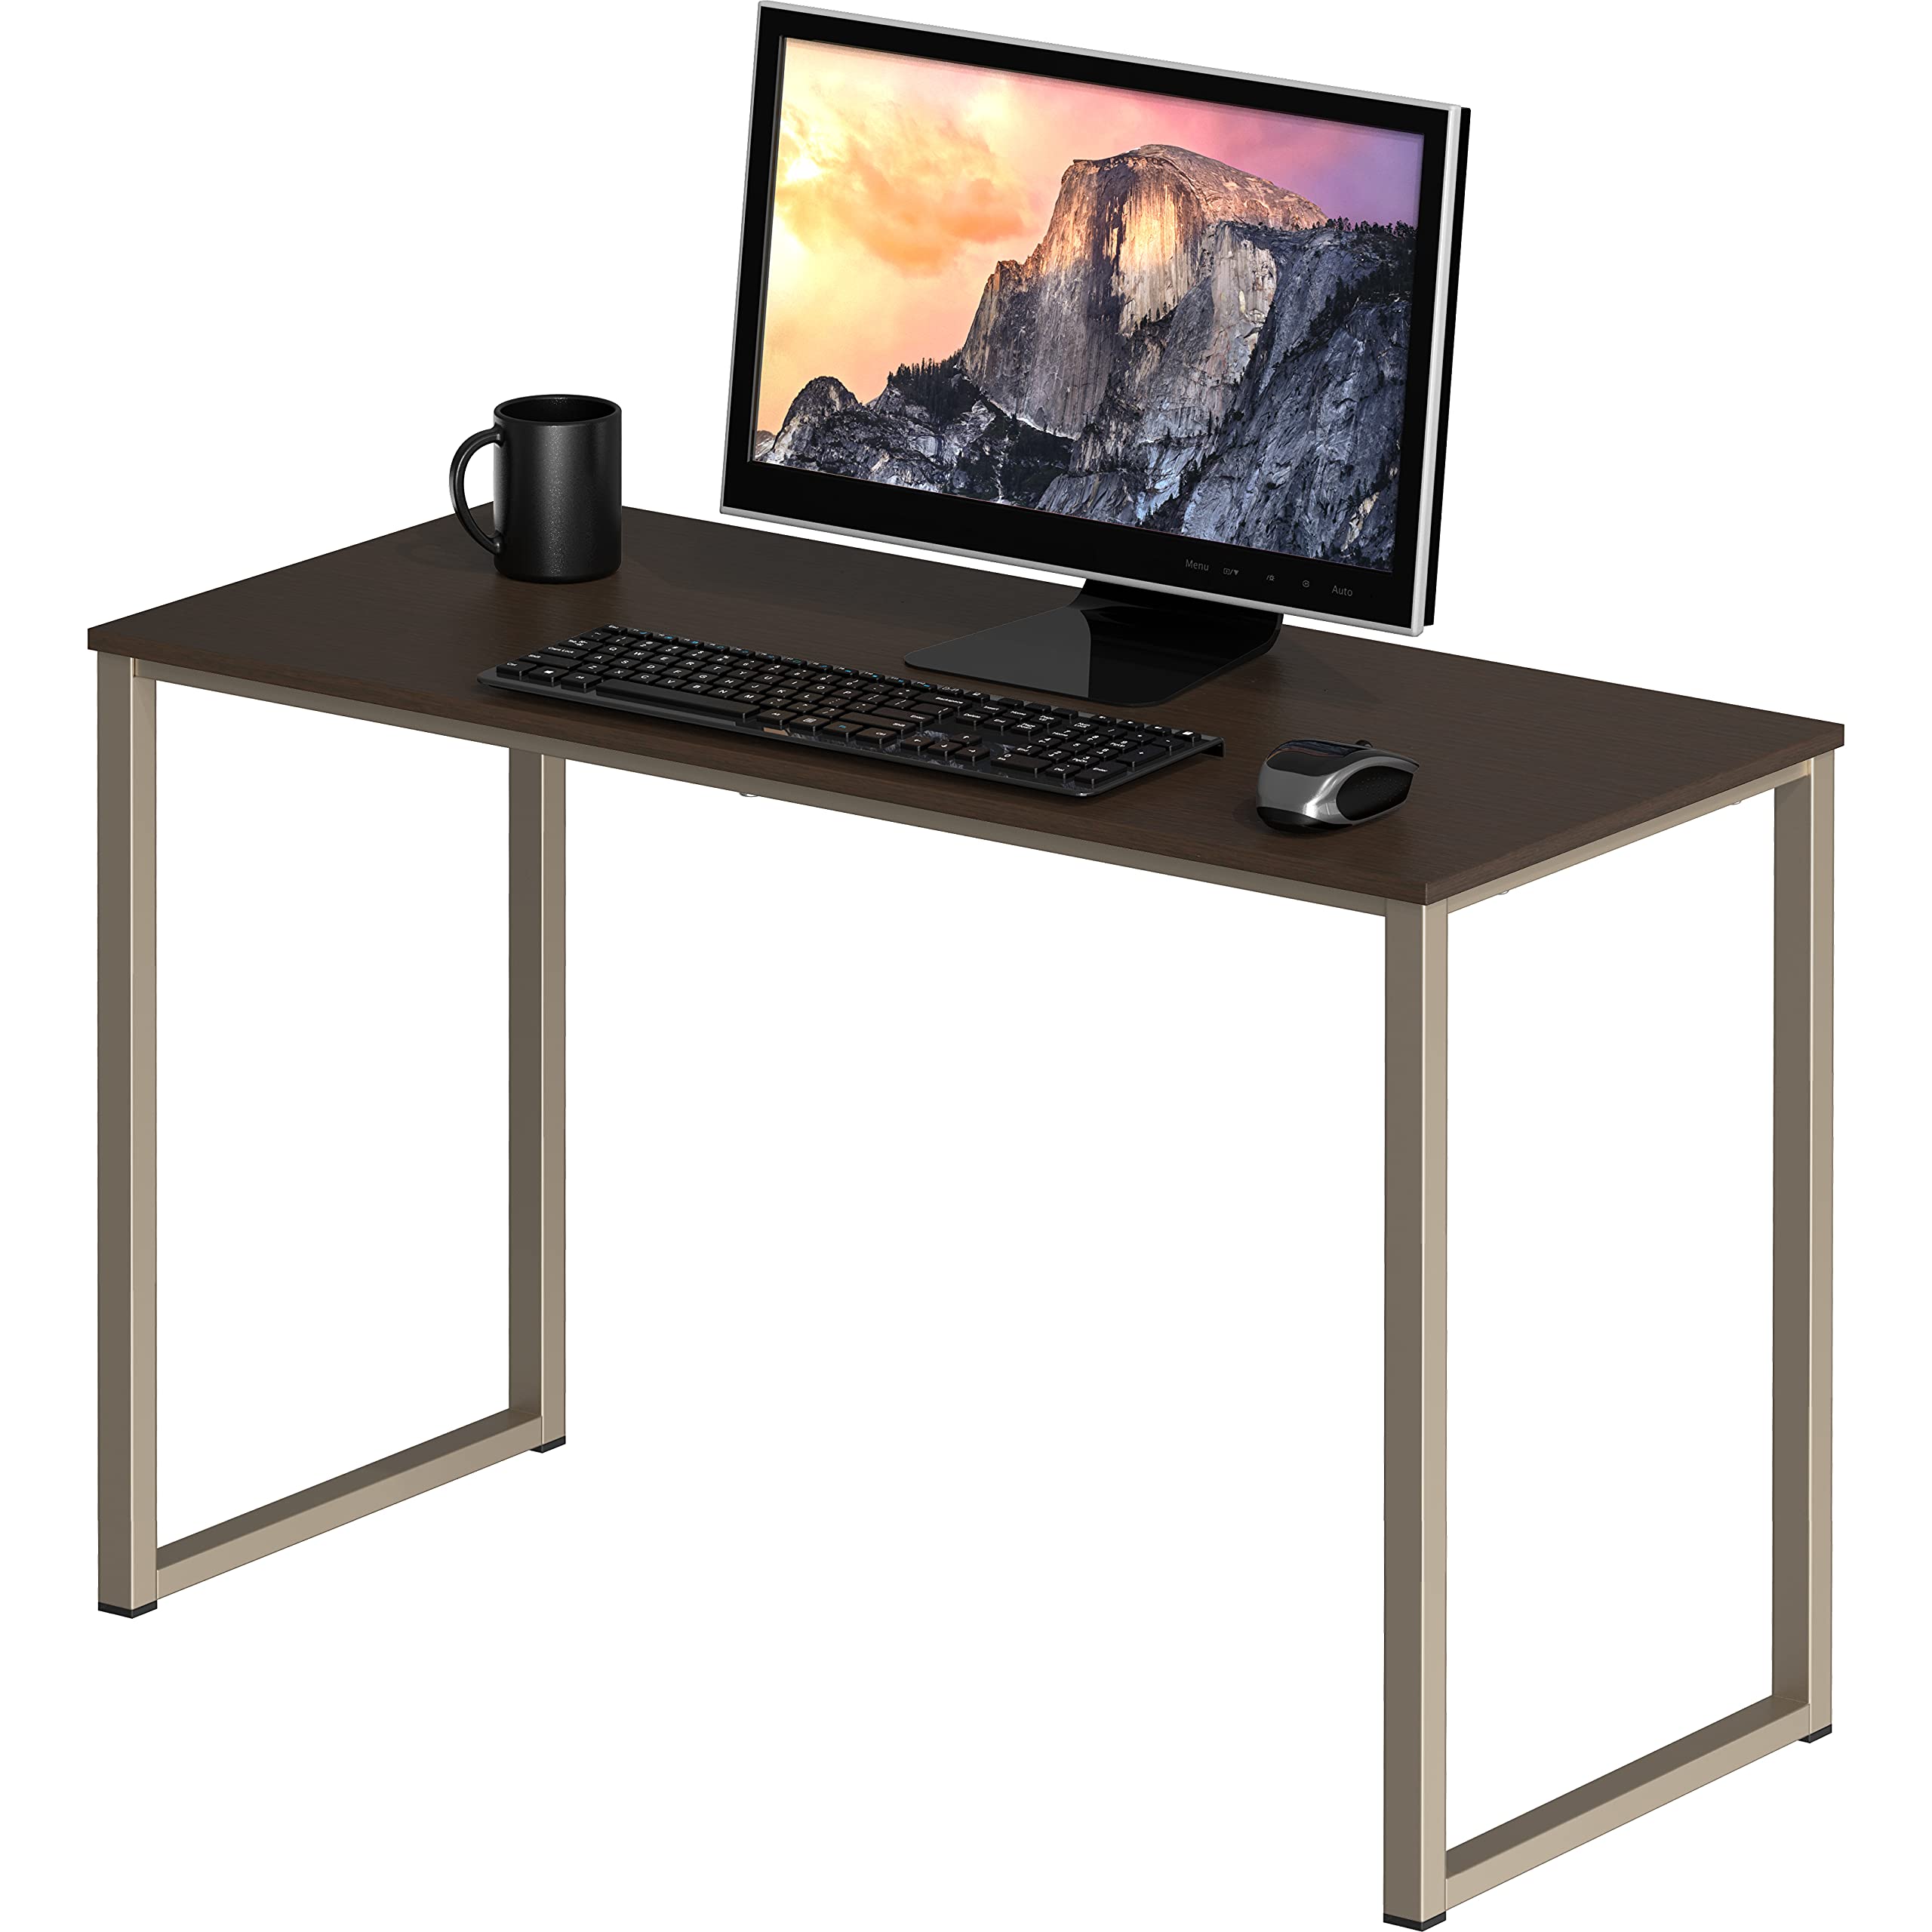 SHW Mission 32 inches office desk, Espresso - image 1 of 5